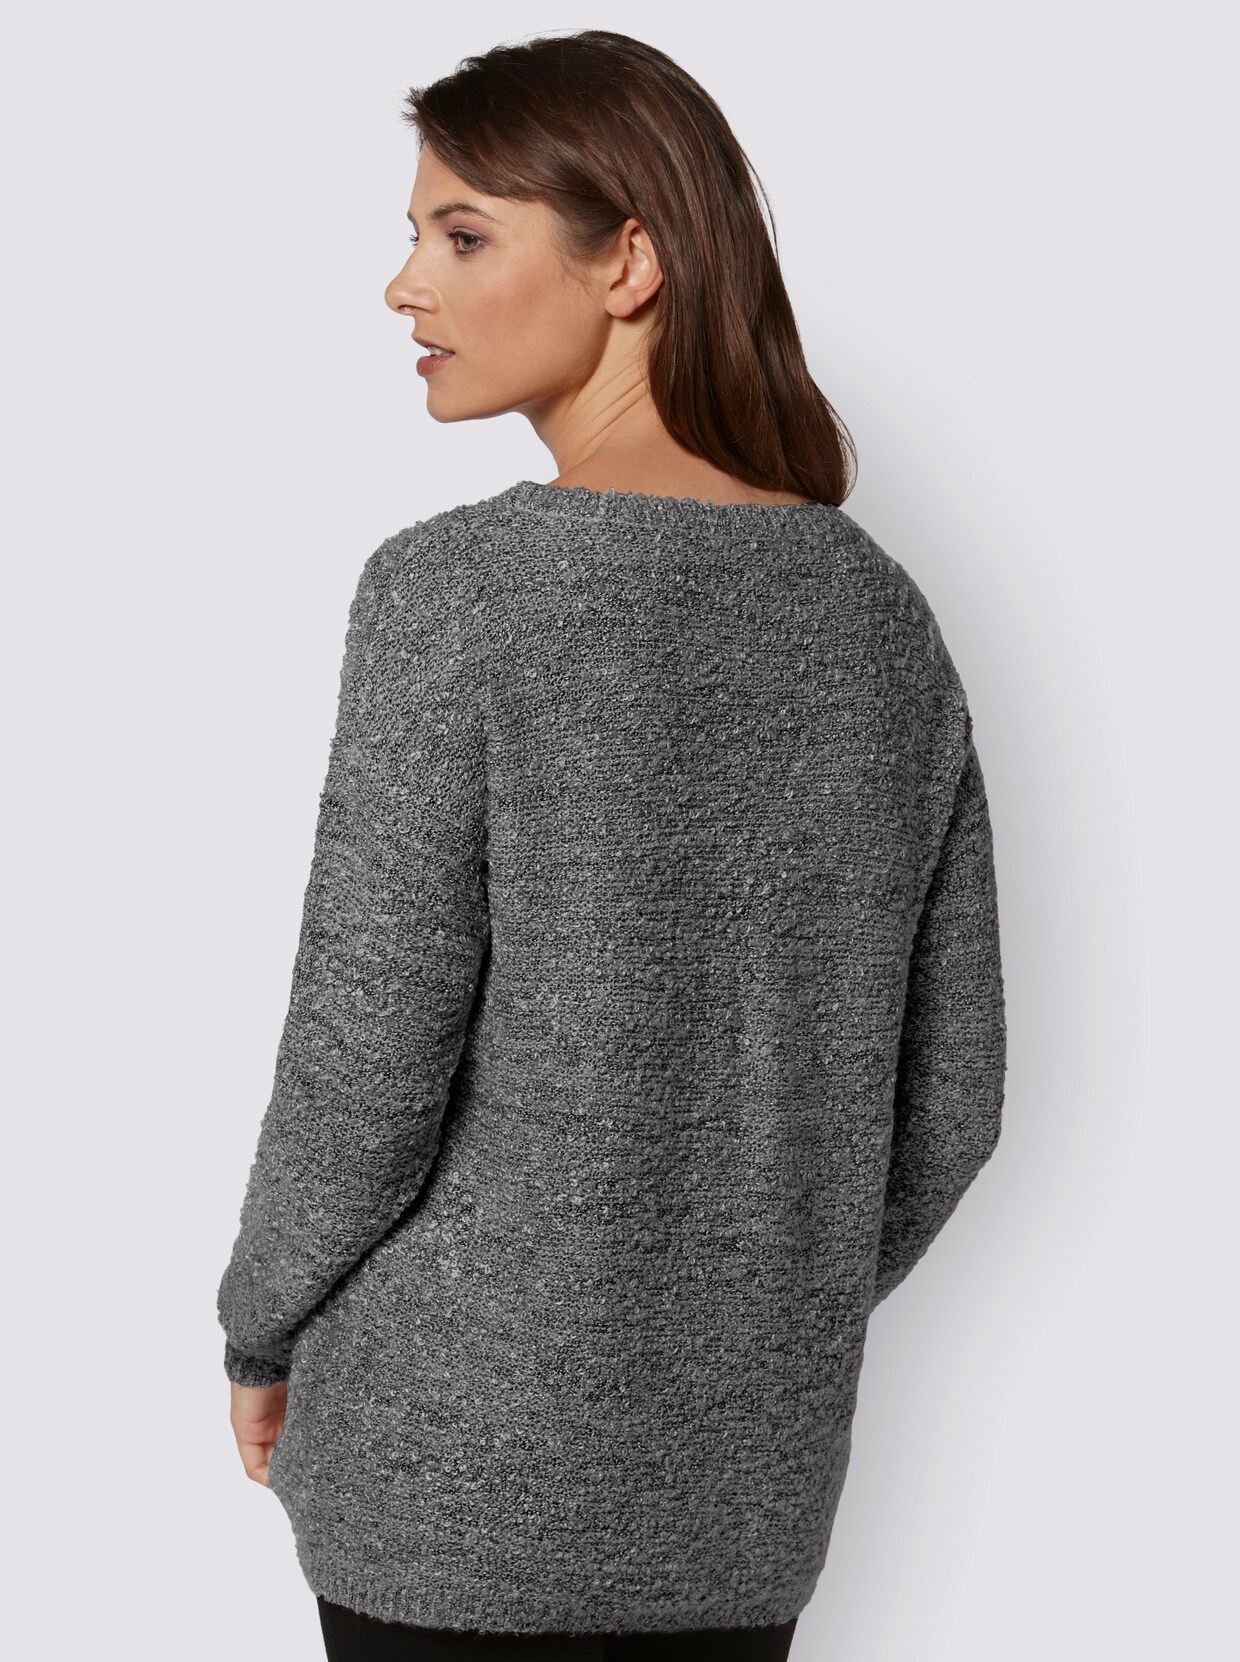 Langarm-Pullover - grau-meliert